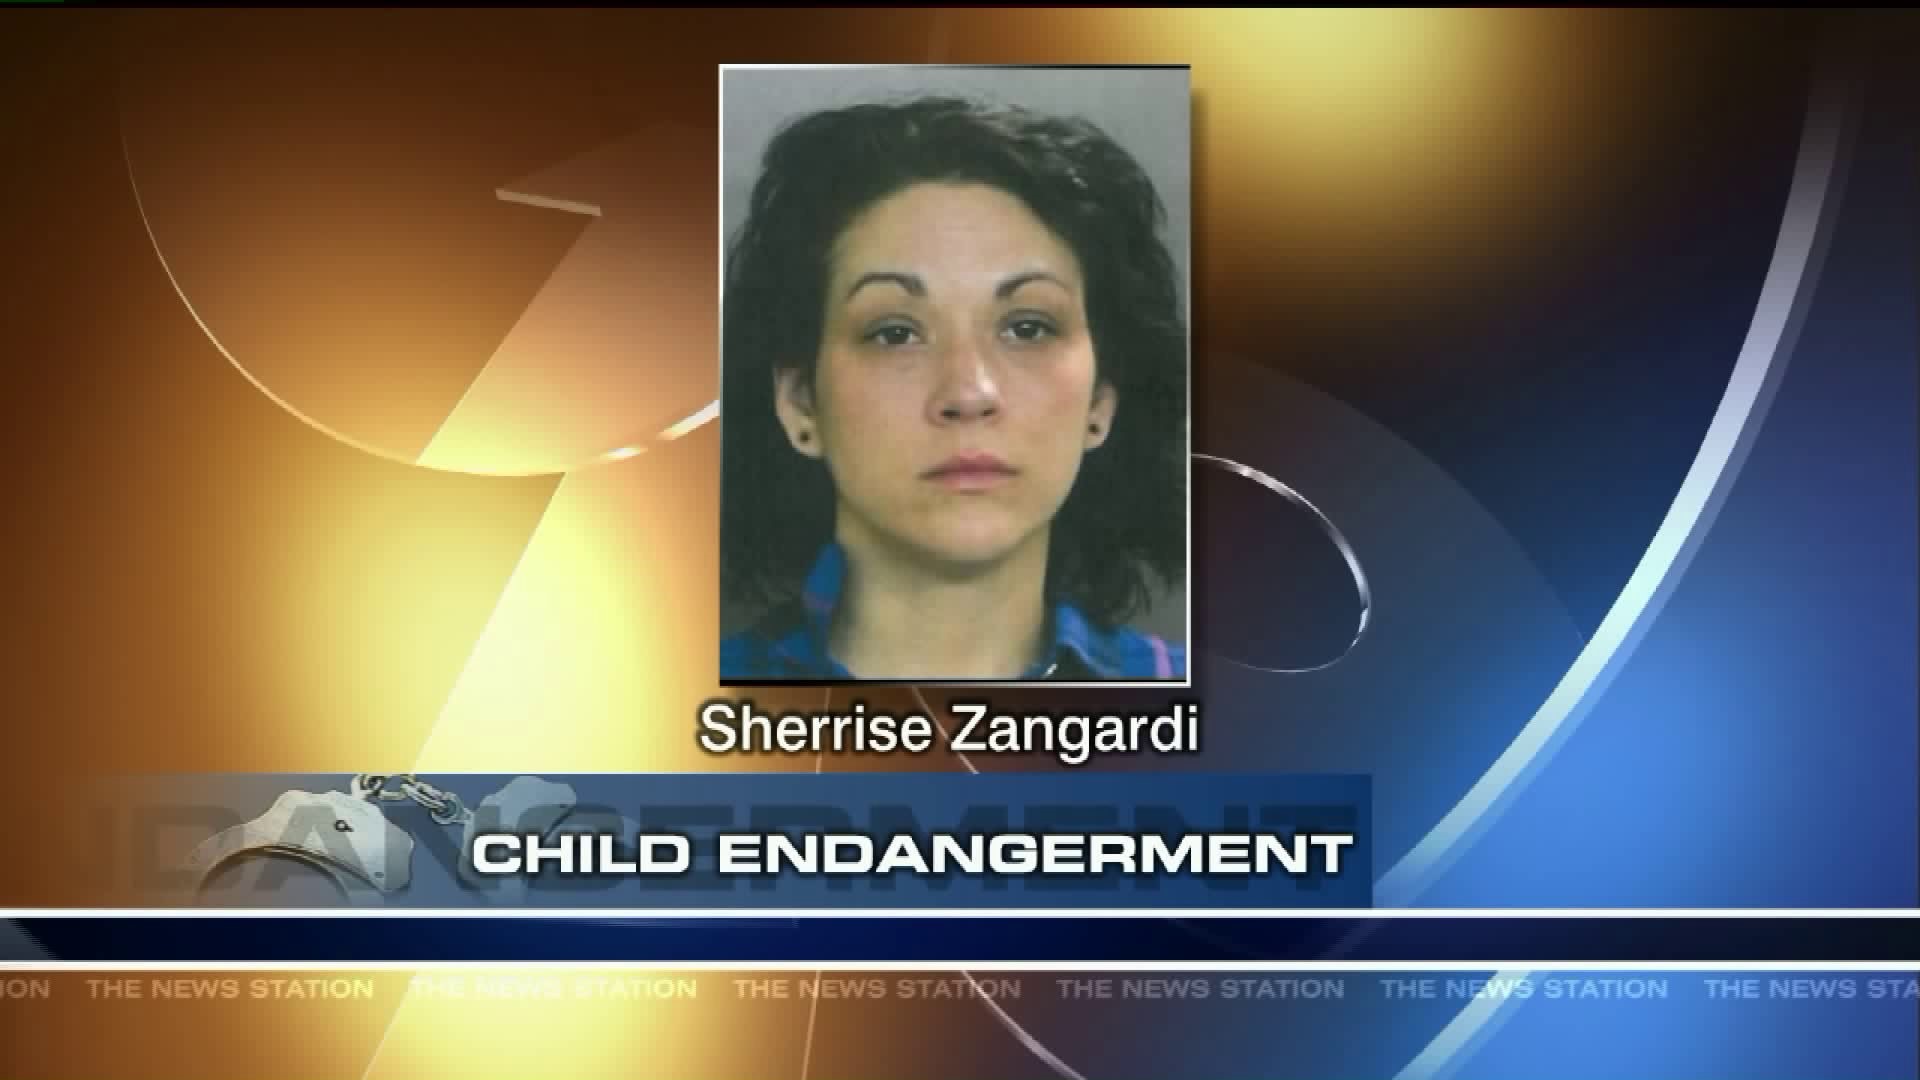 Child Endangerment (11)